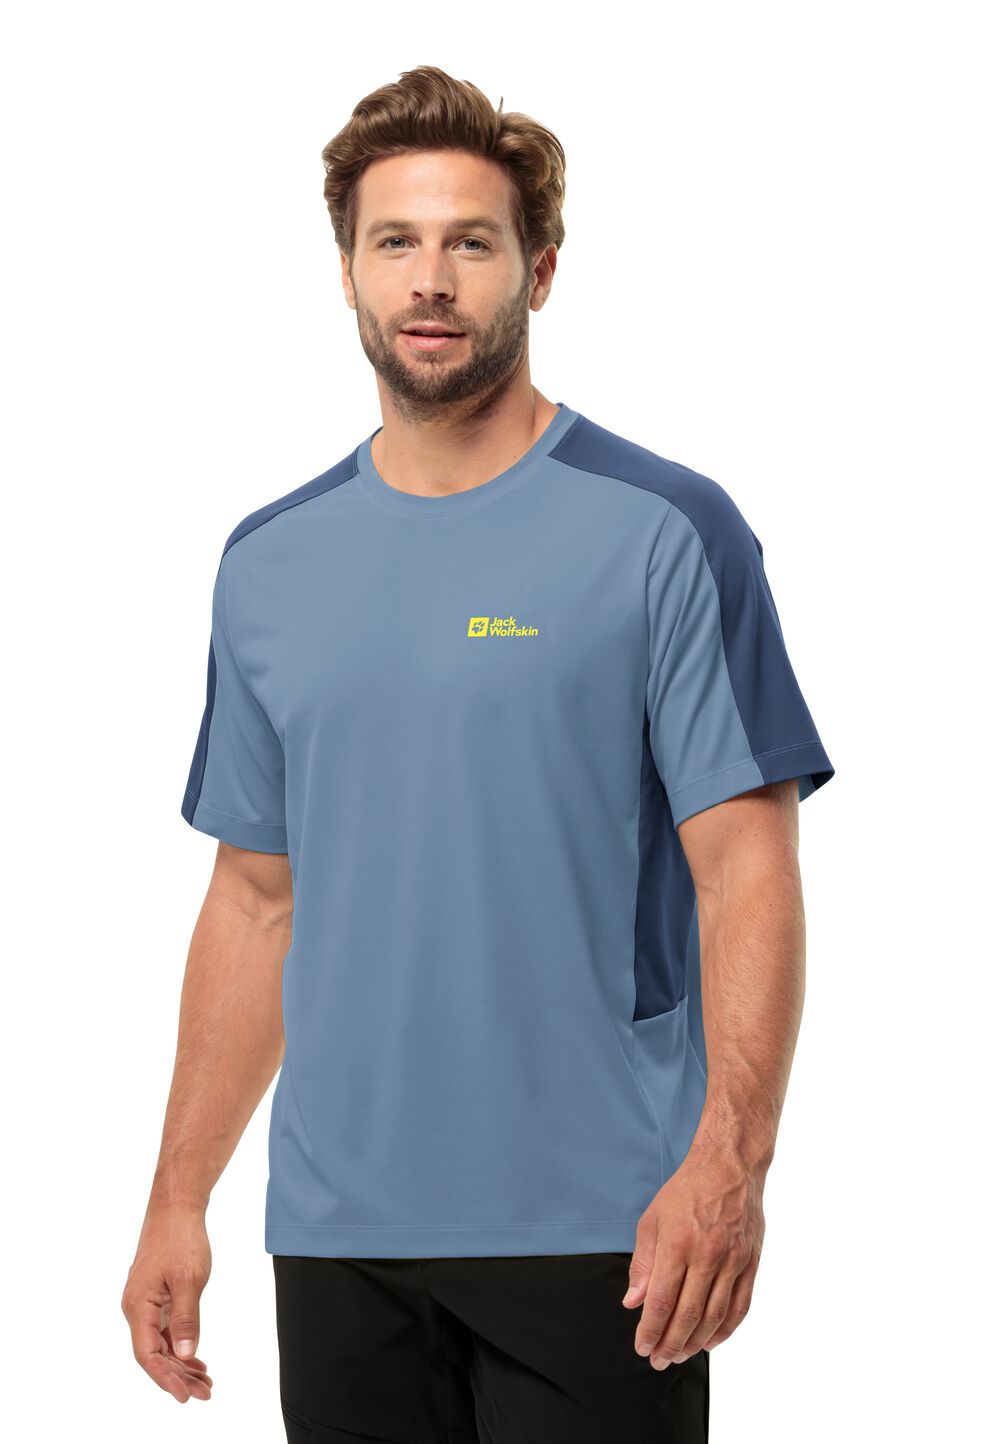 Jack Wolfskin Narrows T-Shirt Men Functioneel shirt Heren XL elemental blue elemental blue